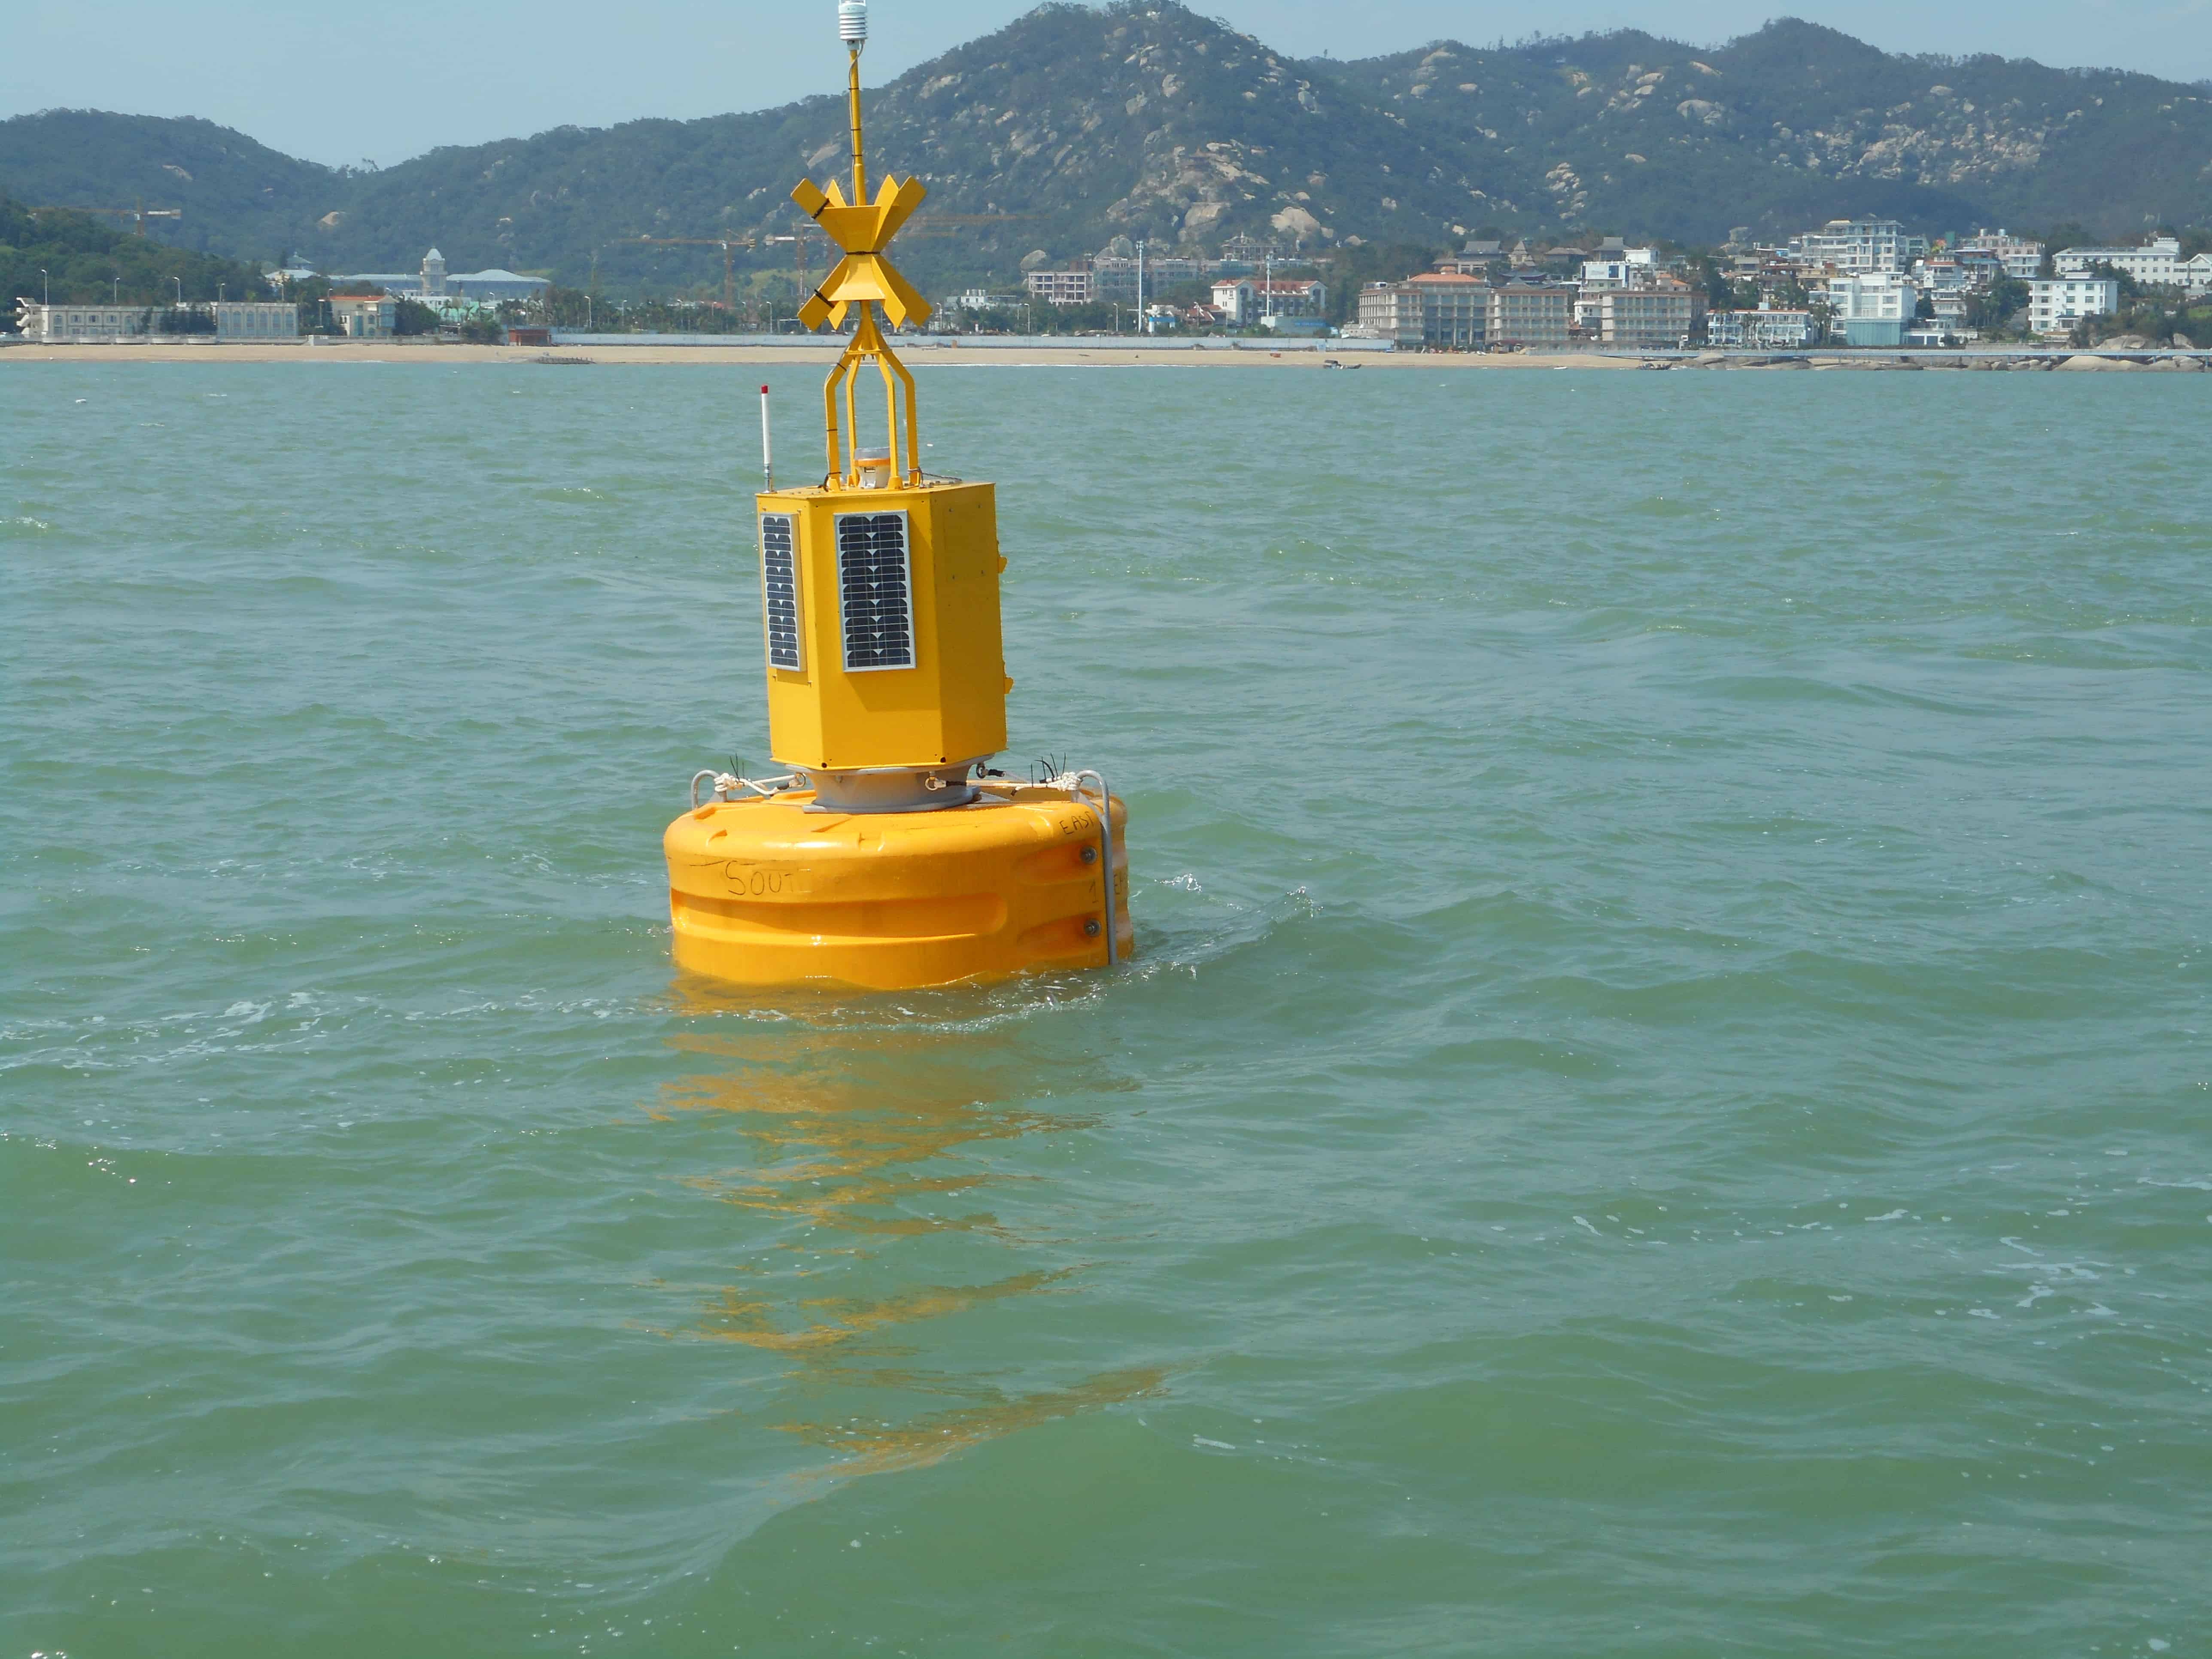 Instrumented buoy - water parameters & current flow measurements